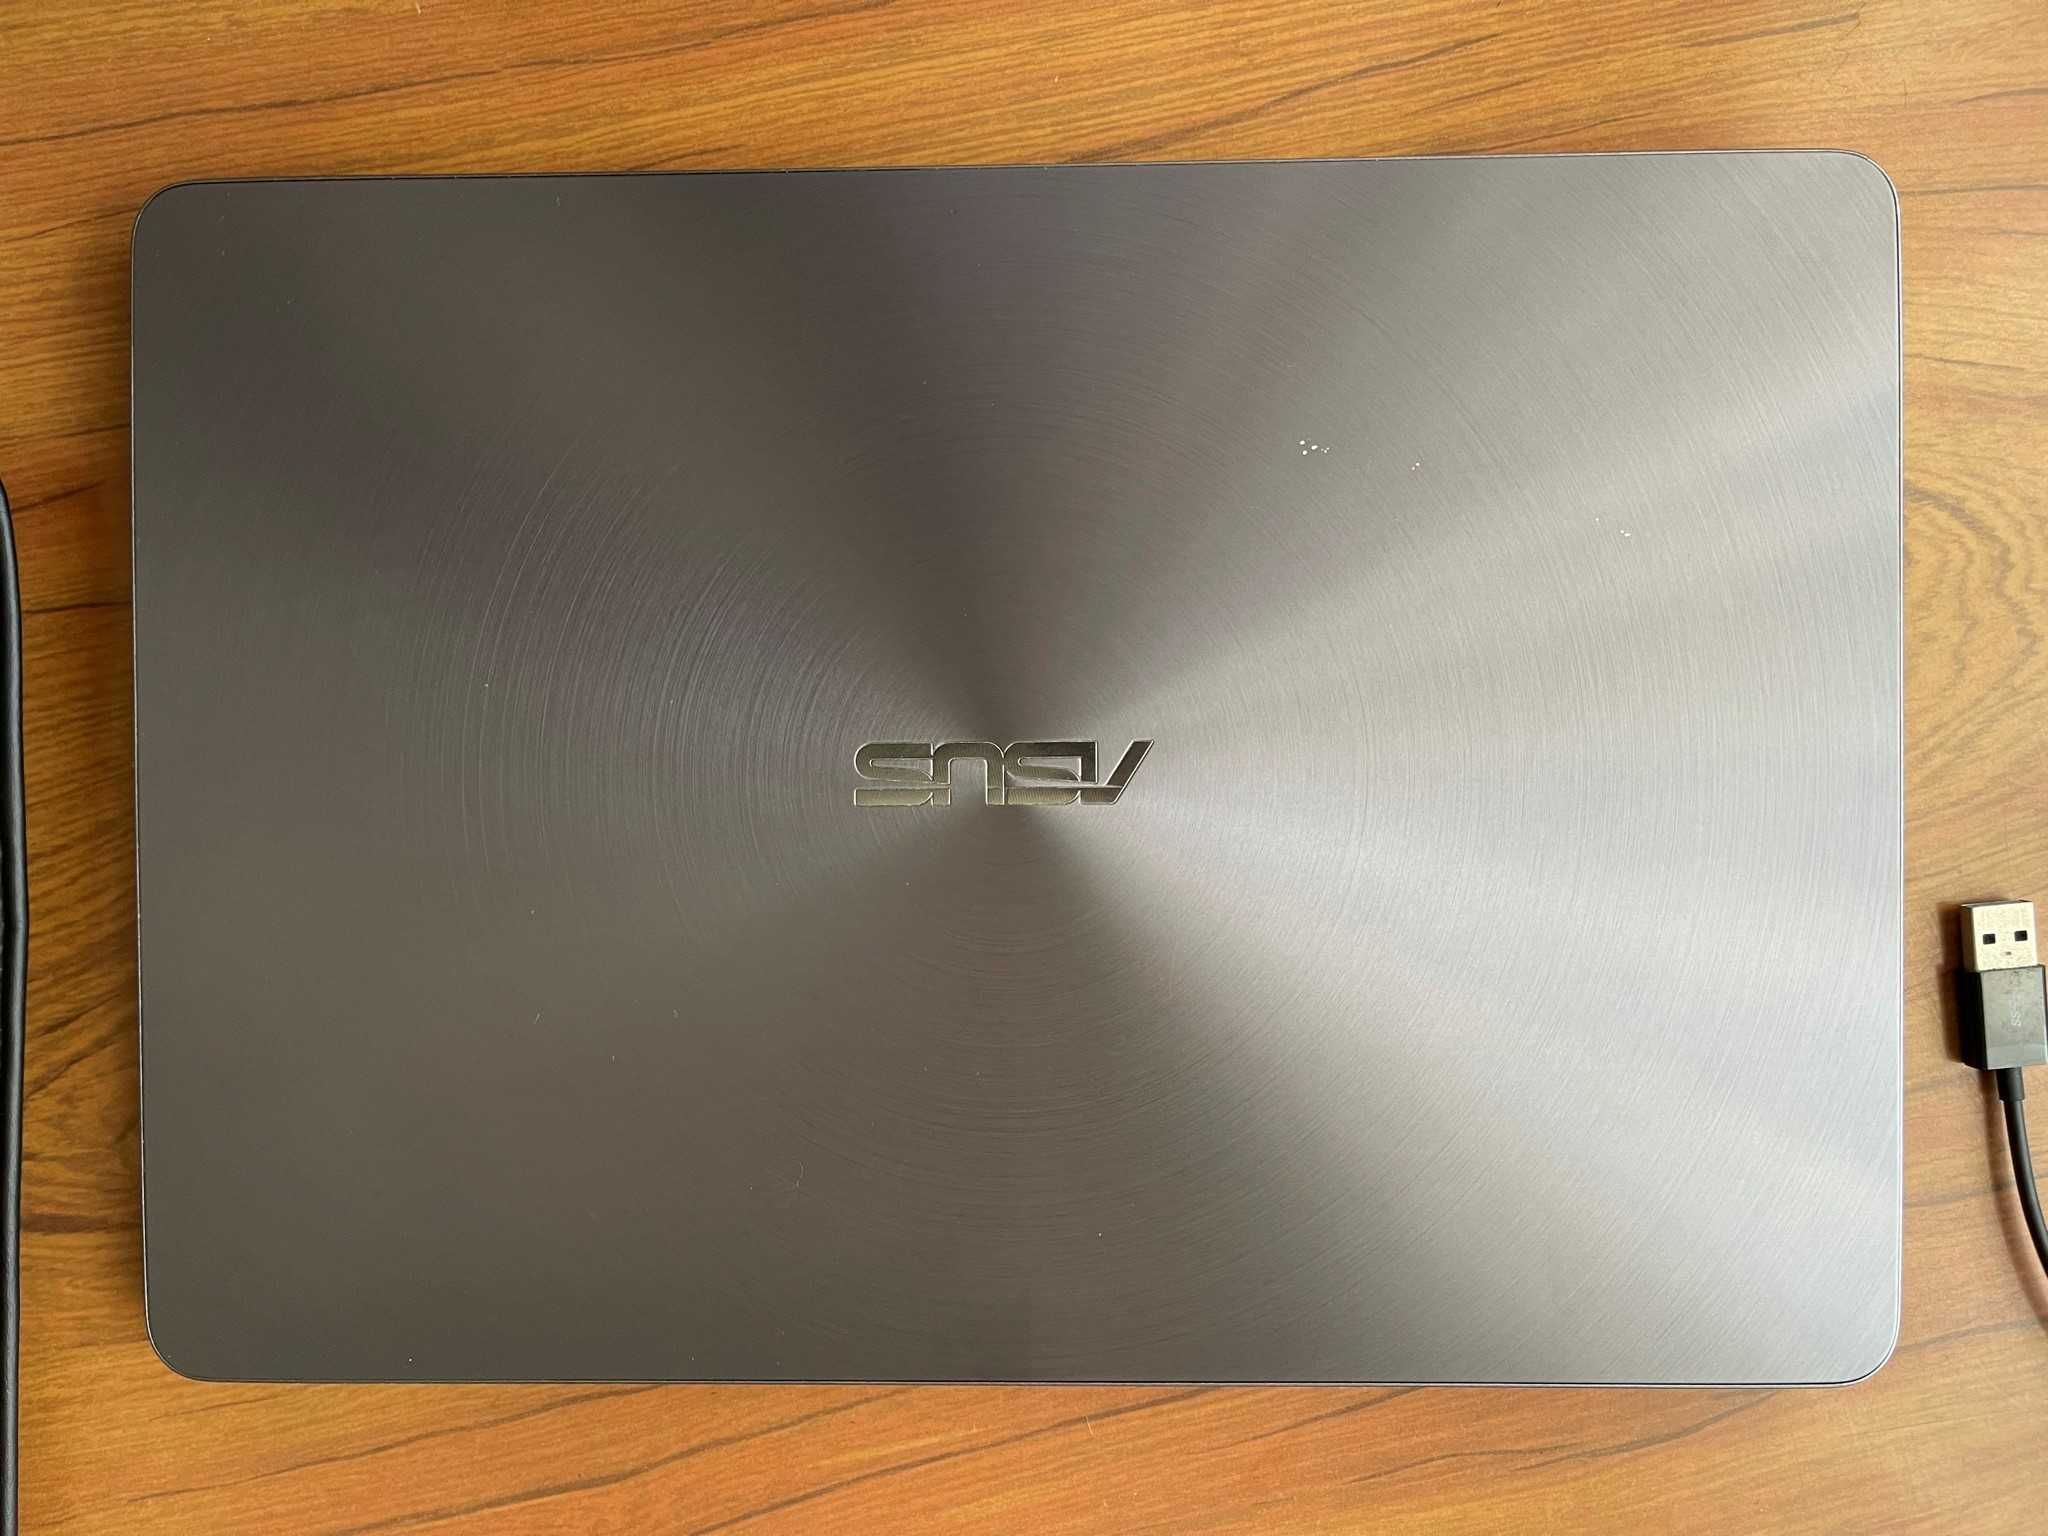 Asus Zenbook Ux430ua I5-7200u Ultra-slim